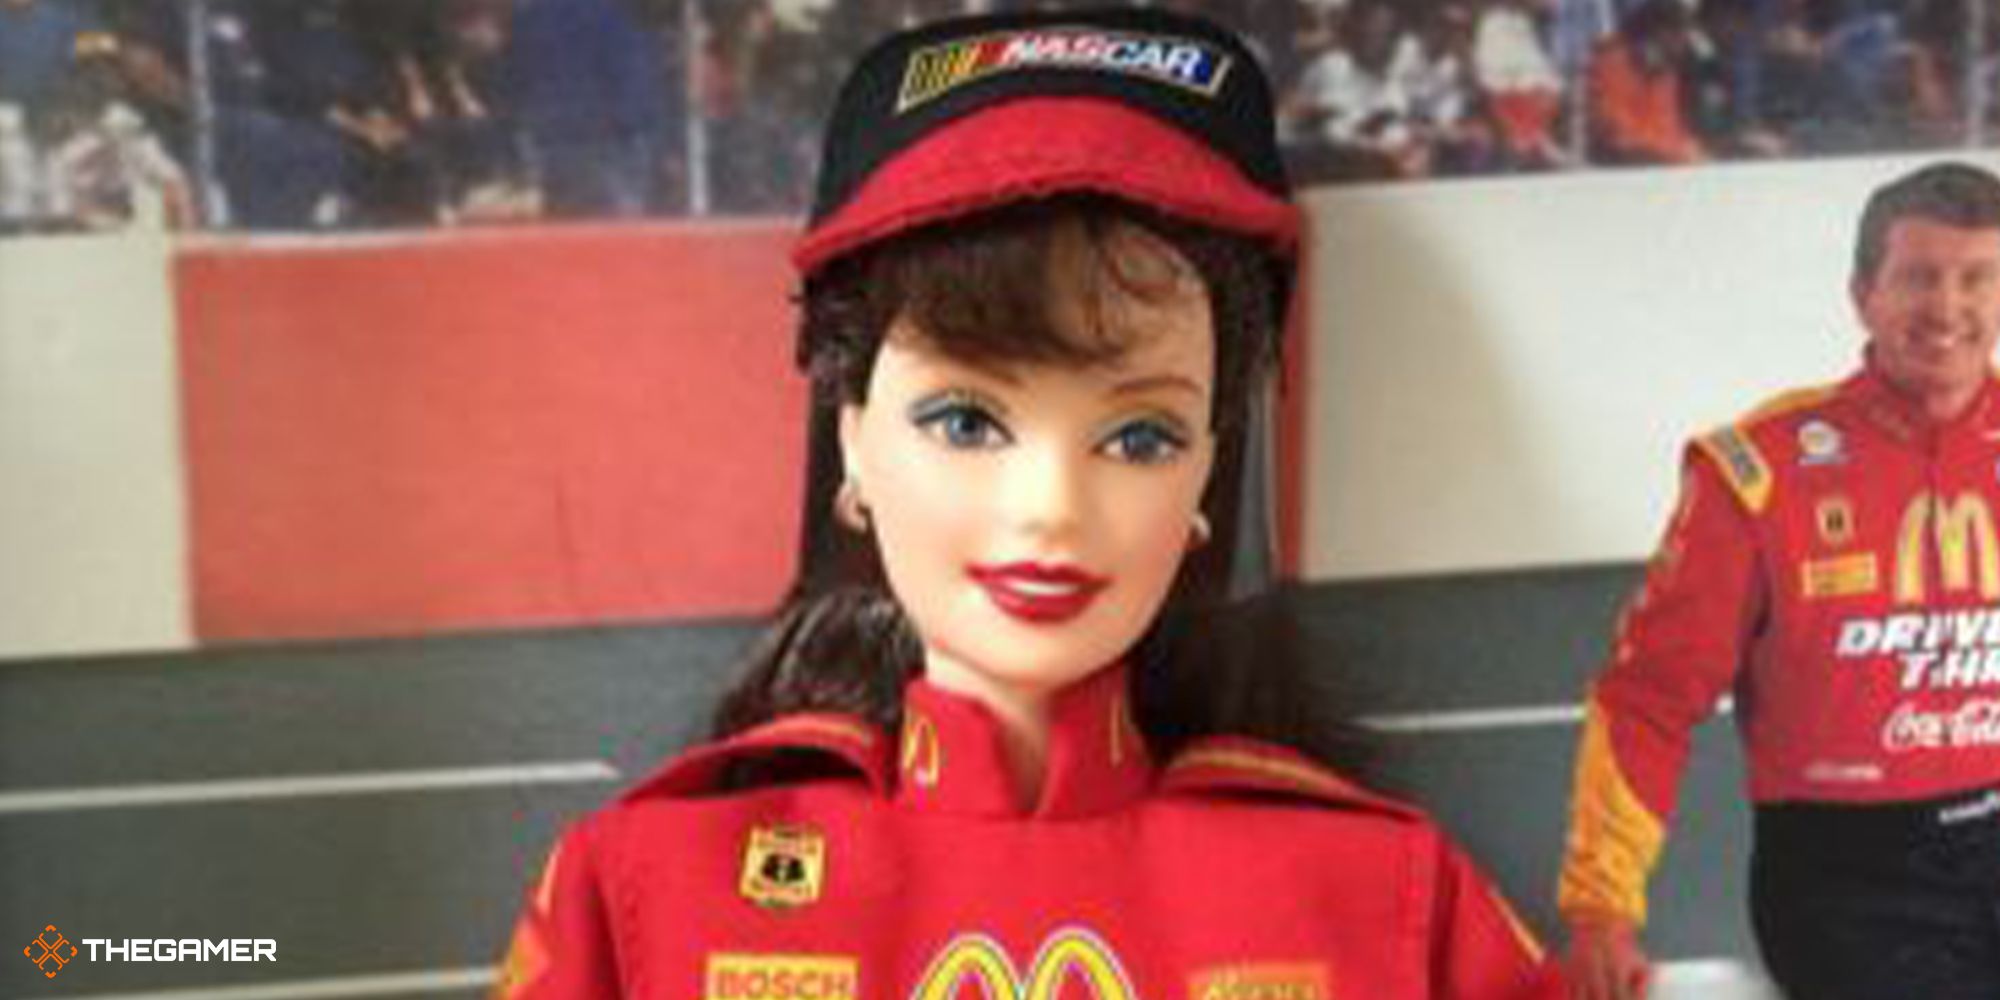 NASCAR Official #94 Barbie Doll